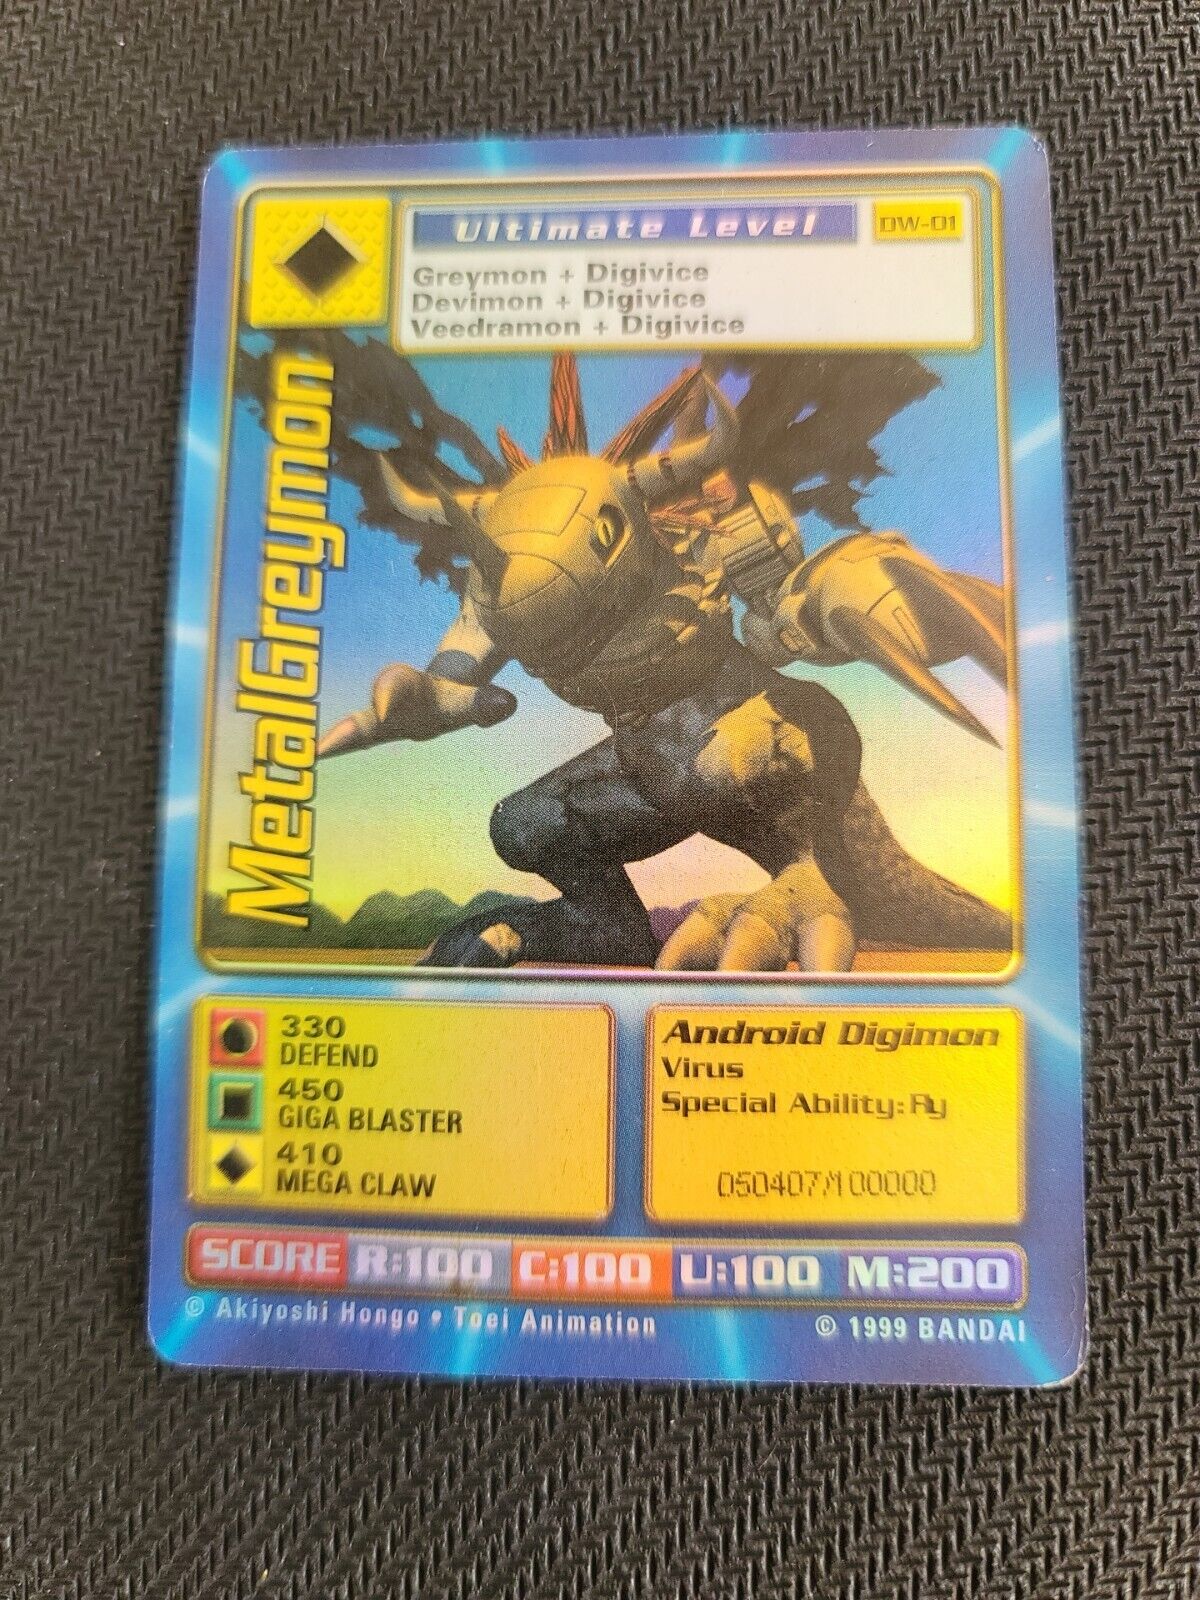 Digimon World PlayStation Promo DW-01 MetalGreymon - number 050407 / 100,000